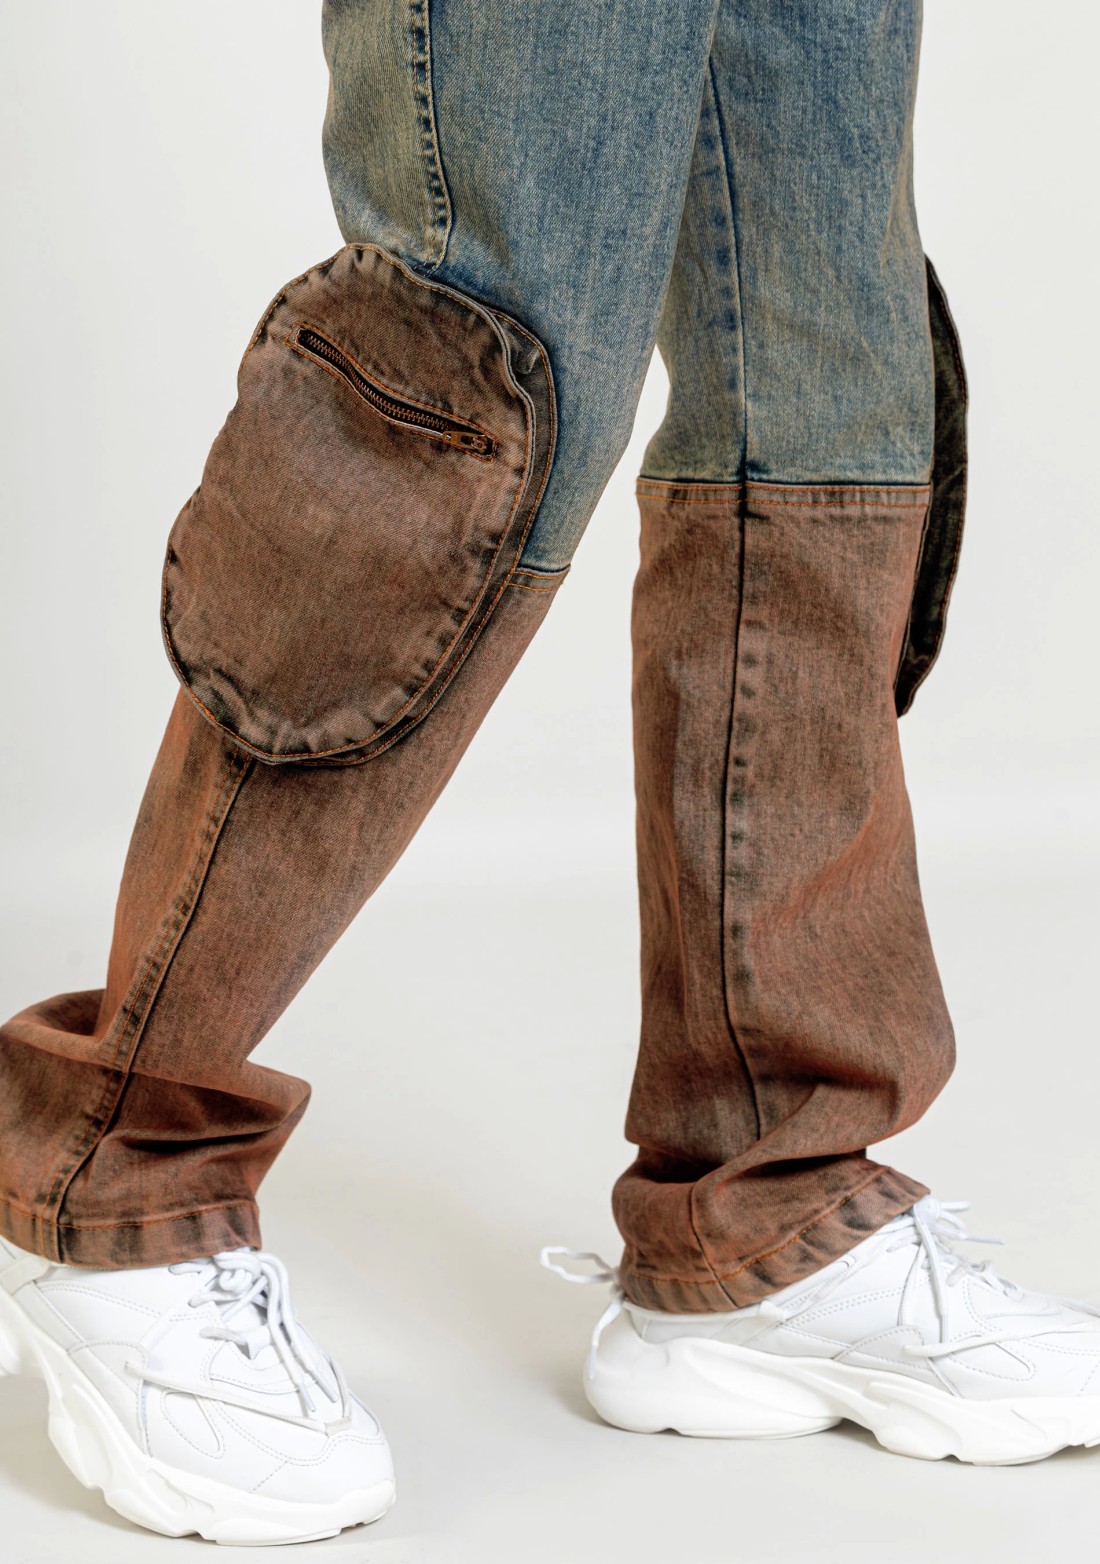 Two Tone Boot Cut Men's Fashion Jeans